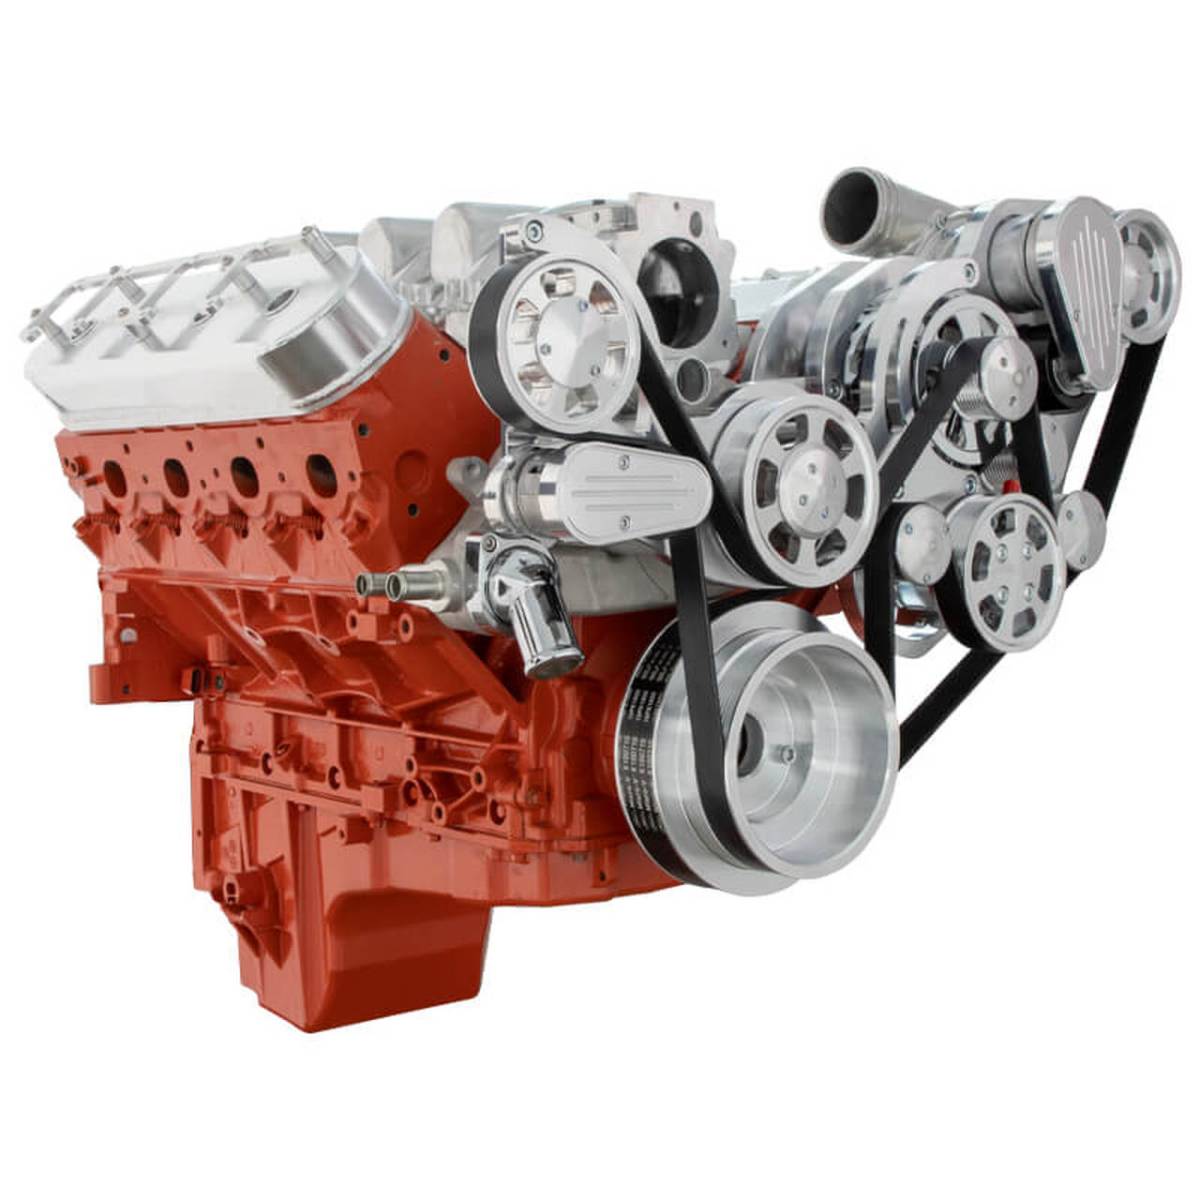 CVF Racing - CVF Wraptor Chevy LS Engine Procharger Serpentine Bracket System with AC & Alternator - Polished - Image 1